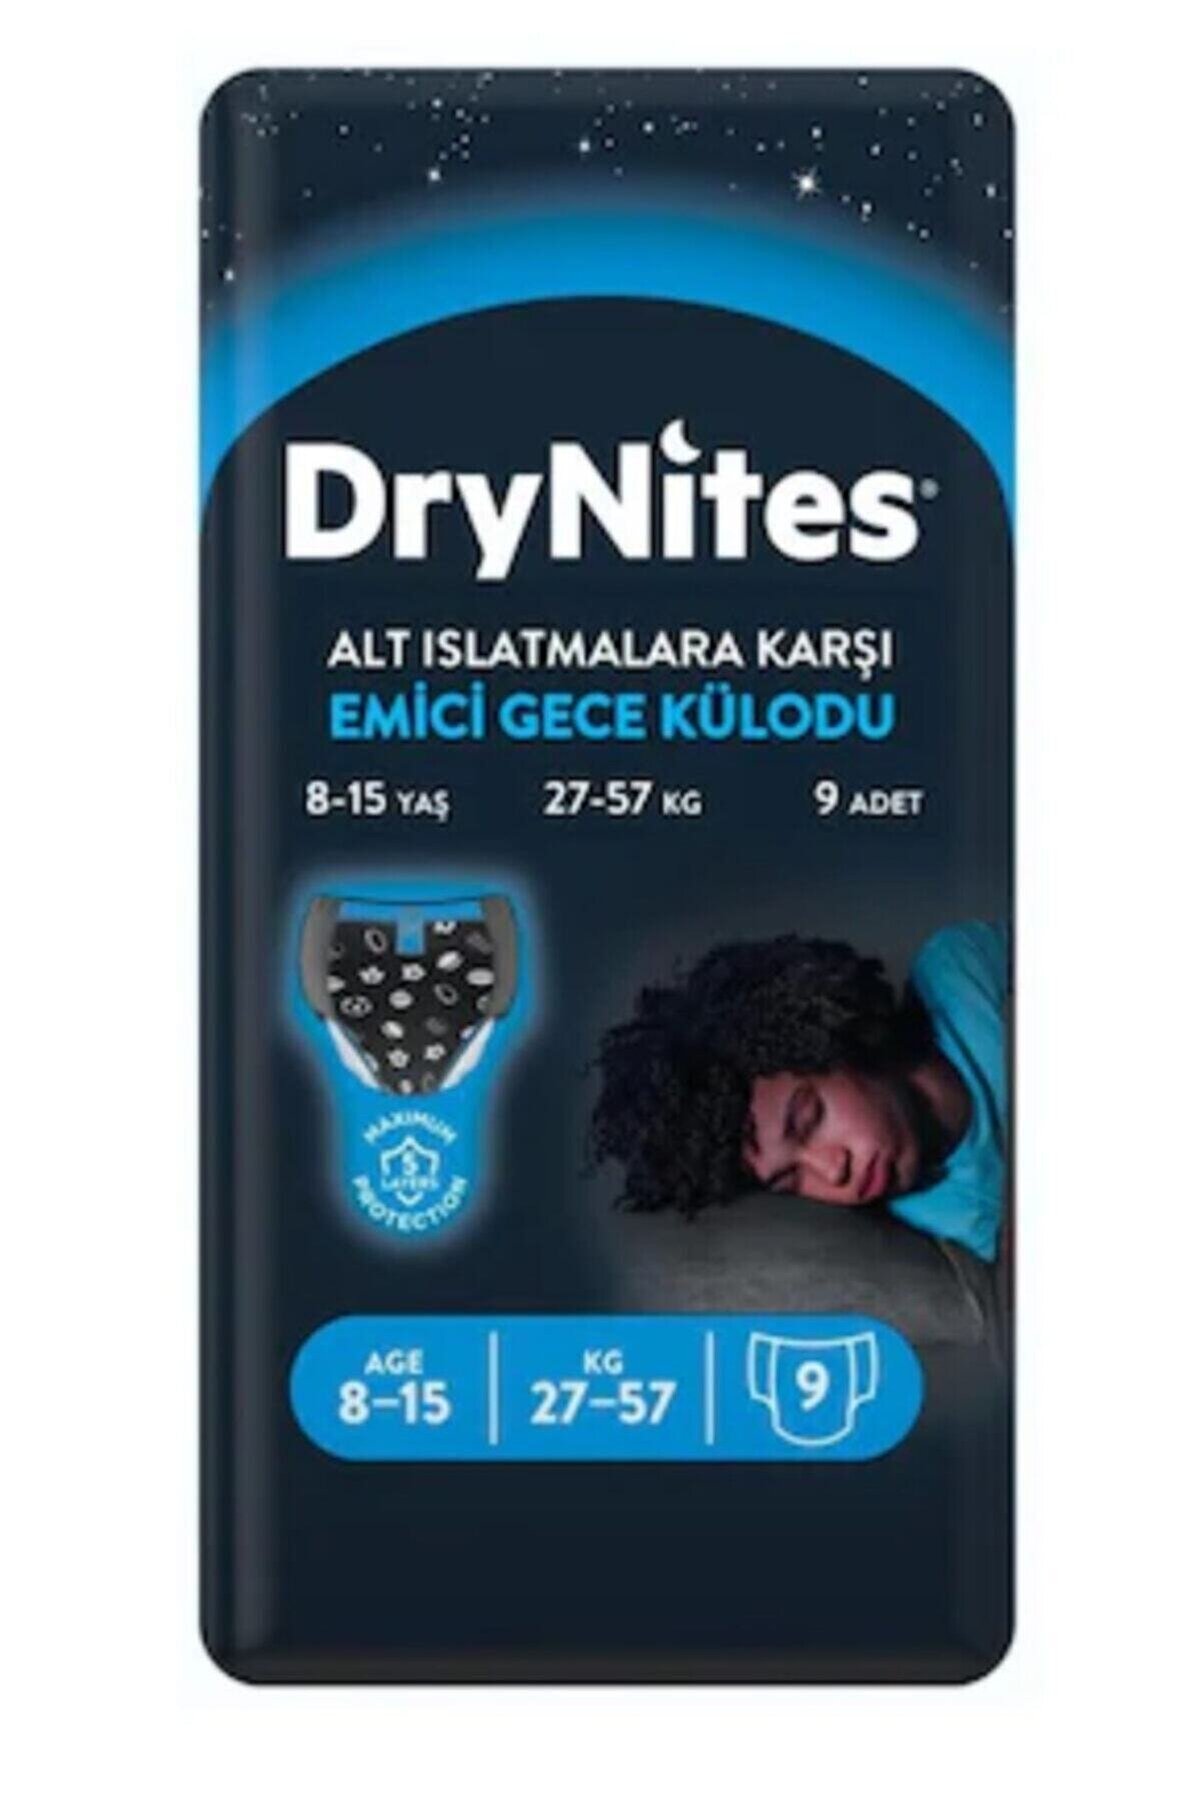 DryNites Huggies Erkek Emici Gece Külodu 8-15 Yaş 27-57kg 9 Lu Paket